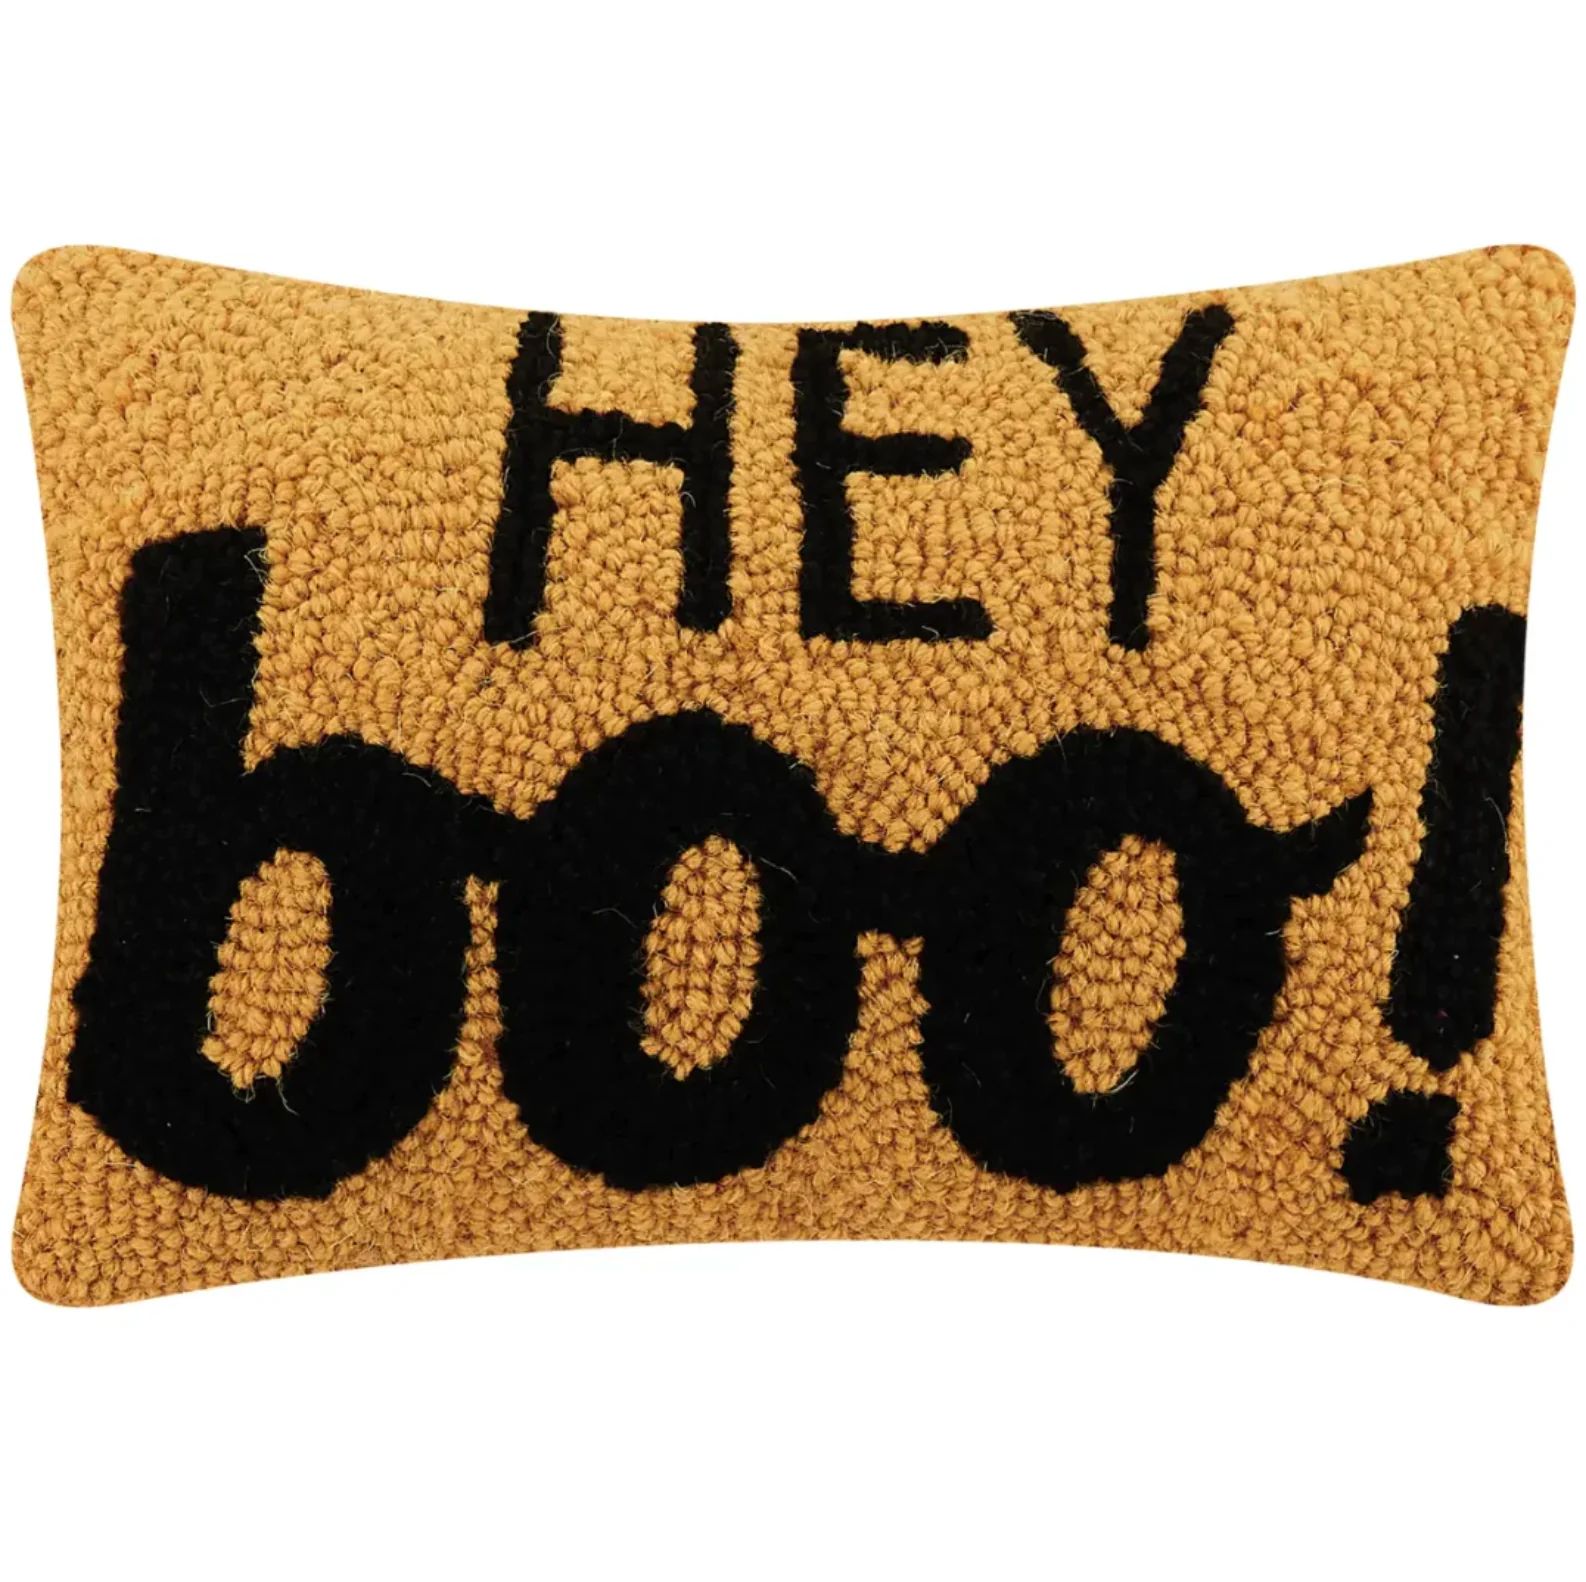 Hey Boo! Hook Pillow | Waiting On Martha